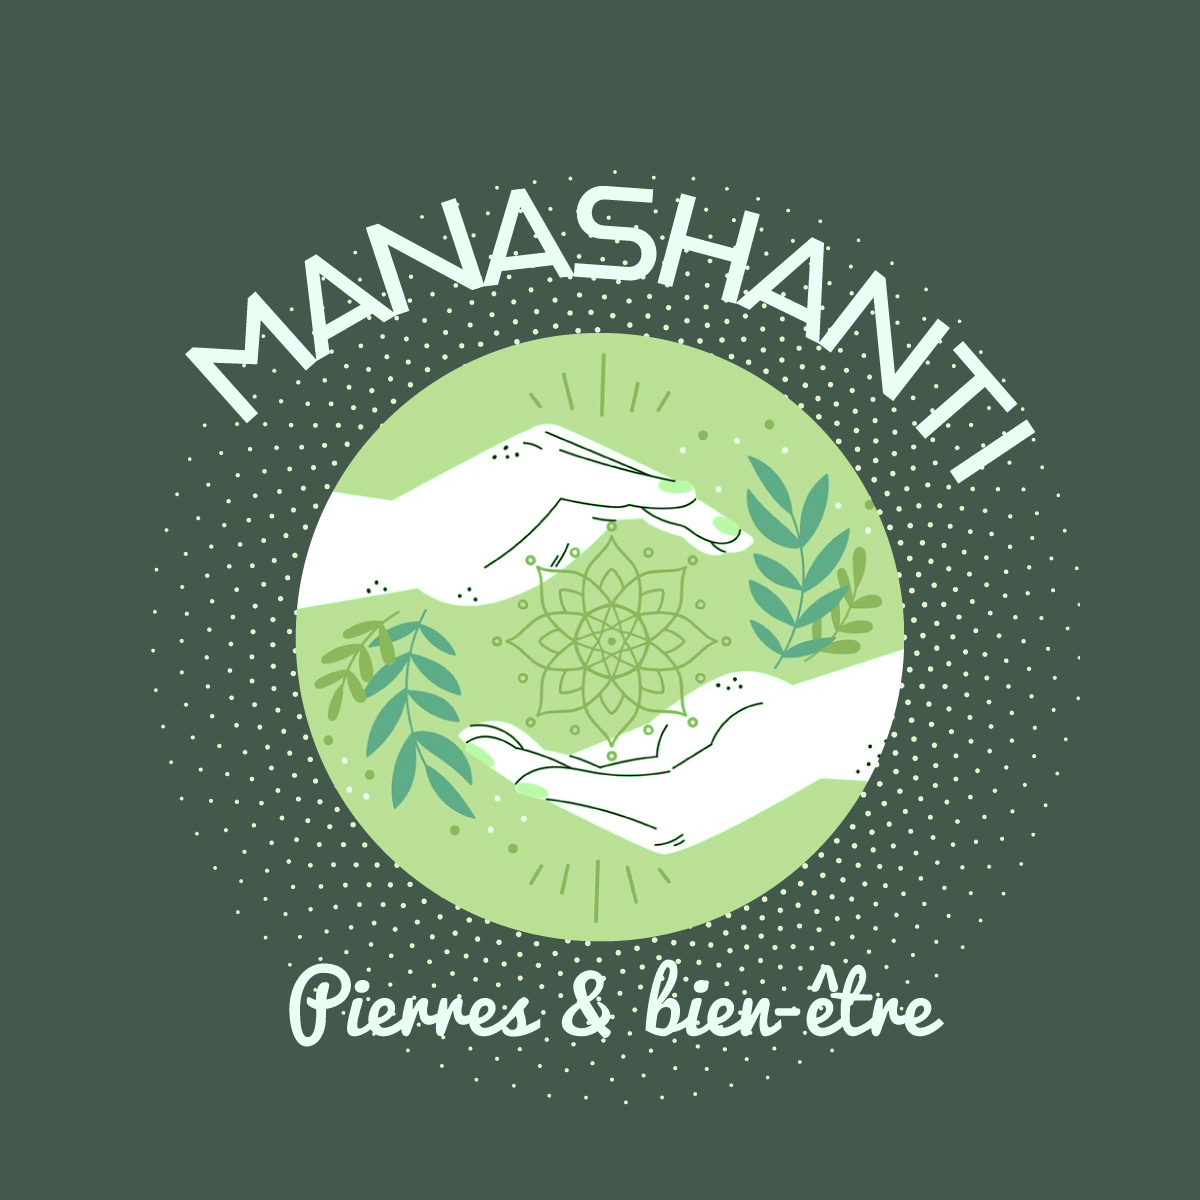 Manashanti